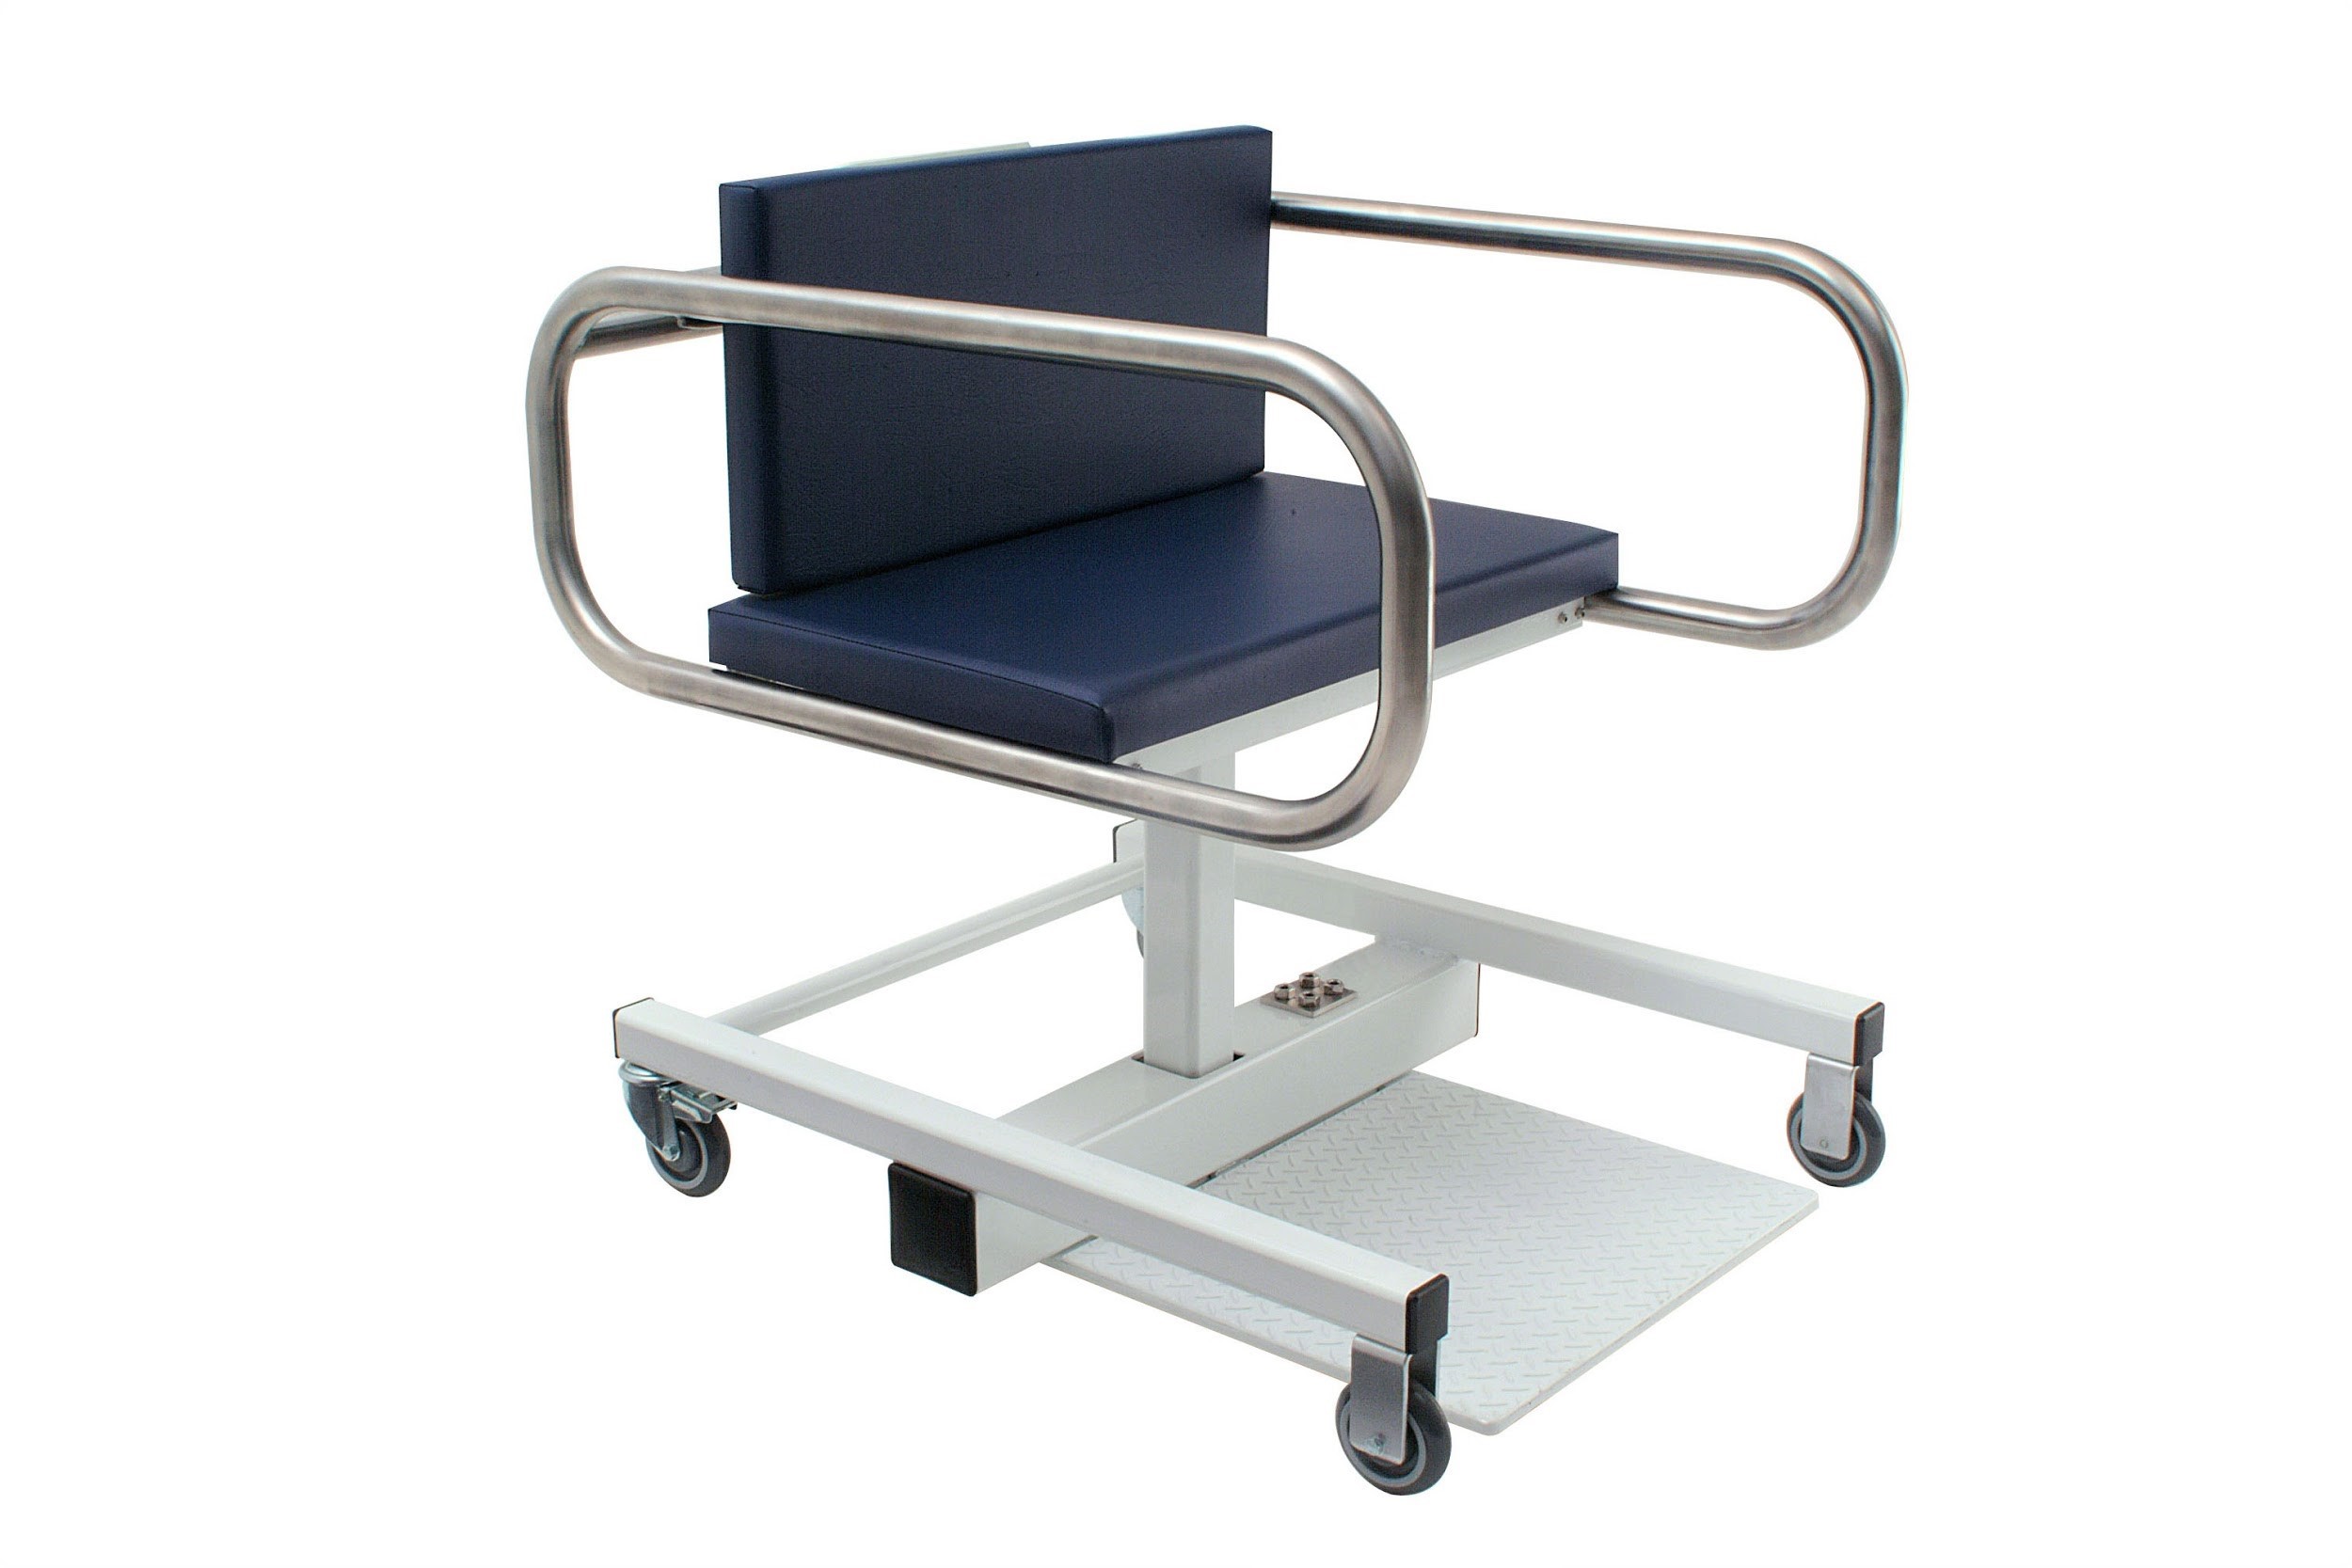 Custom Chair Scale for Health Application